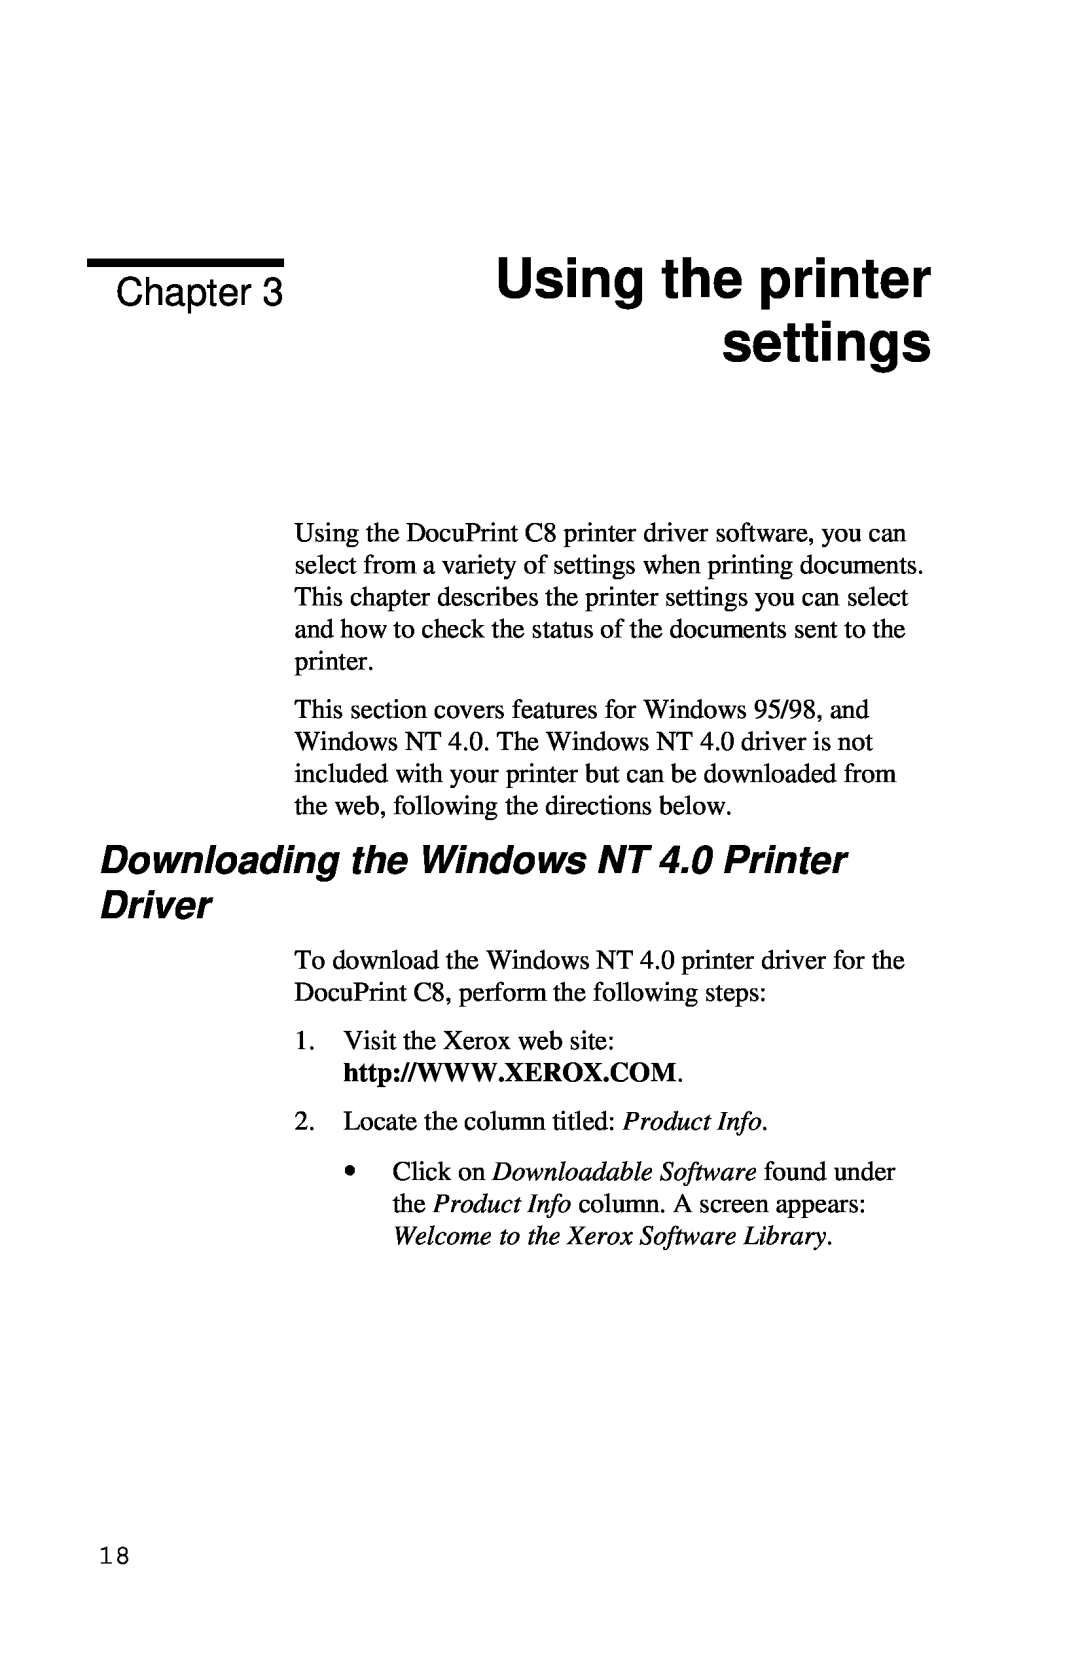 Xerox Inkjet Printer manual Using the printer settings, Downloading the Windows NT 4.0 Printer Driver, Chapter 